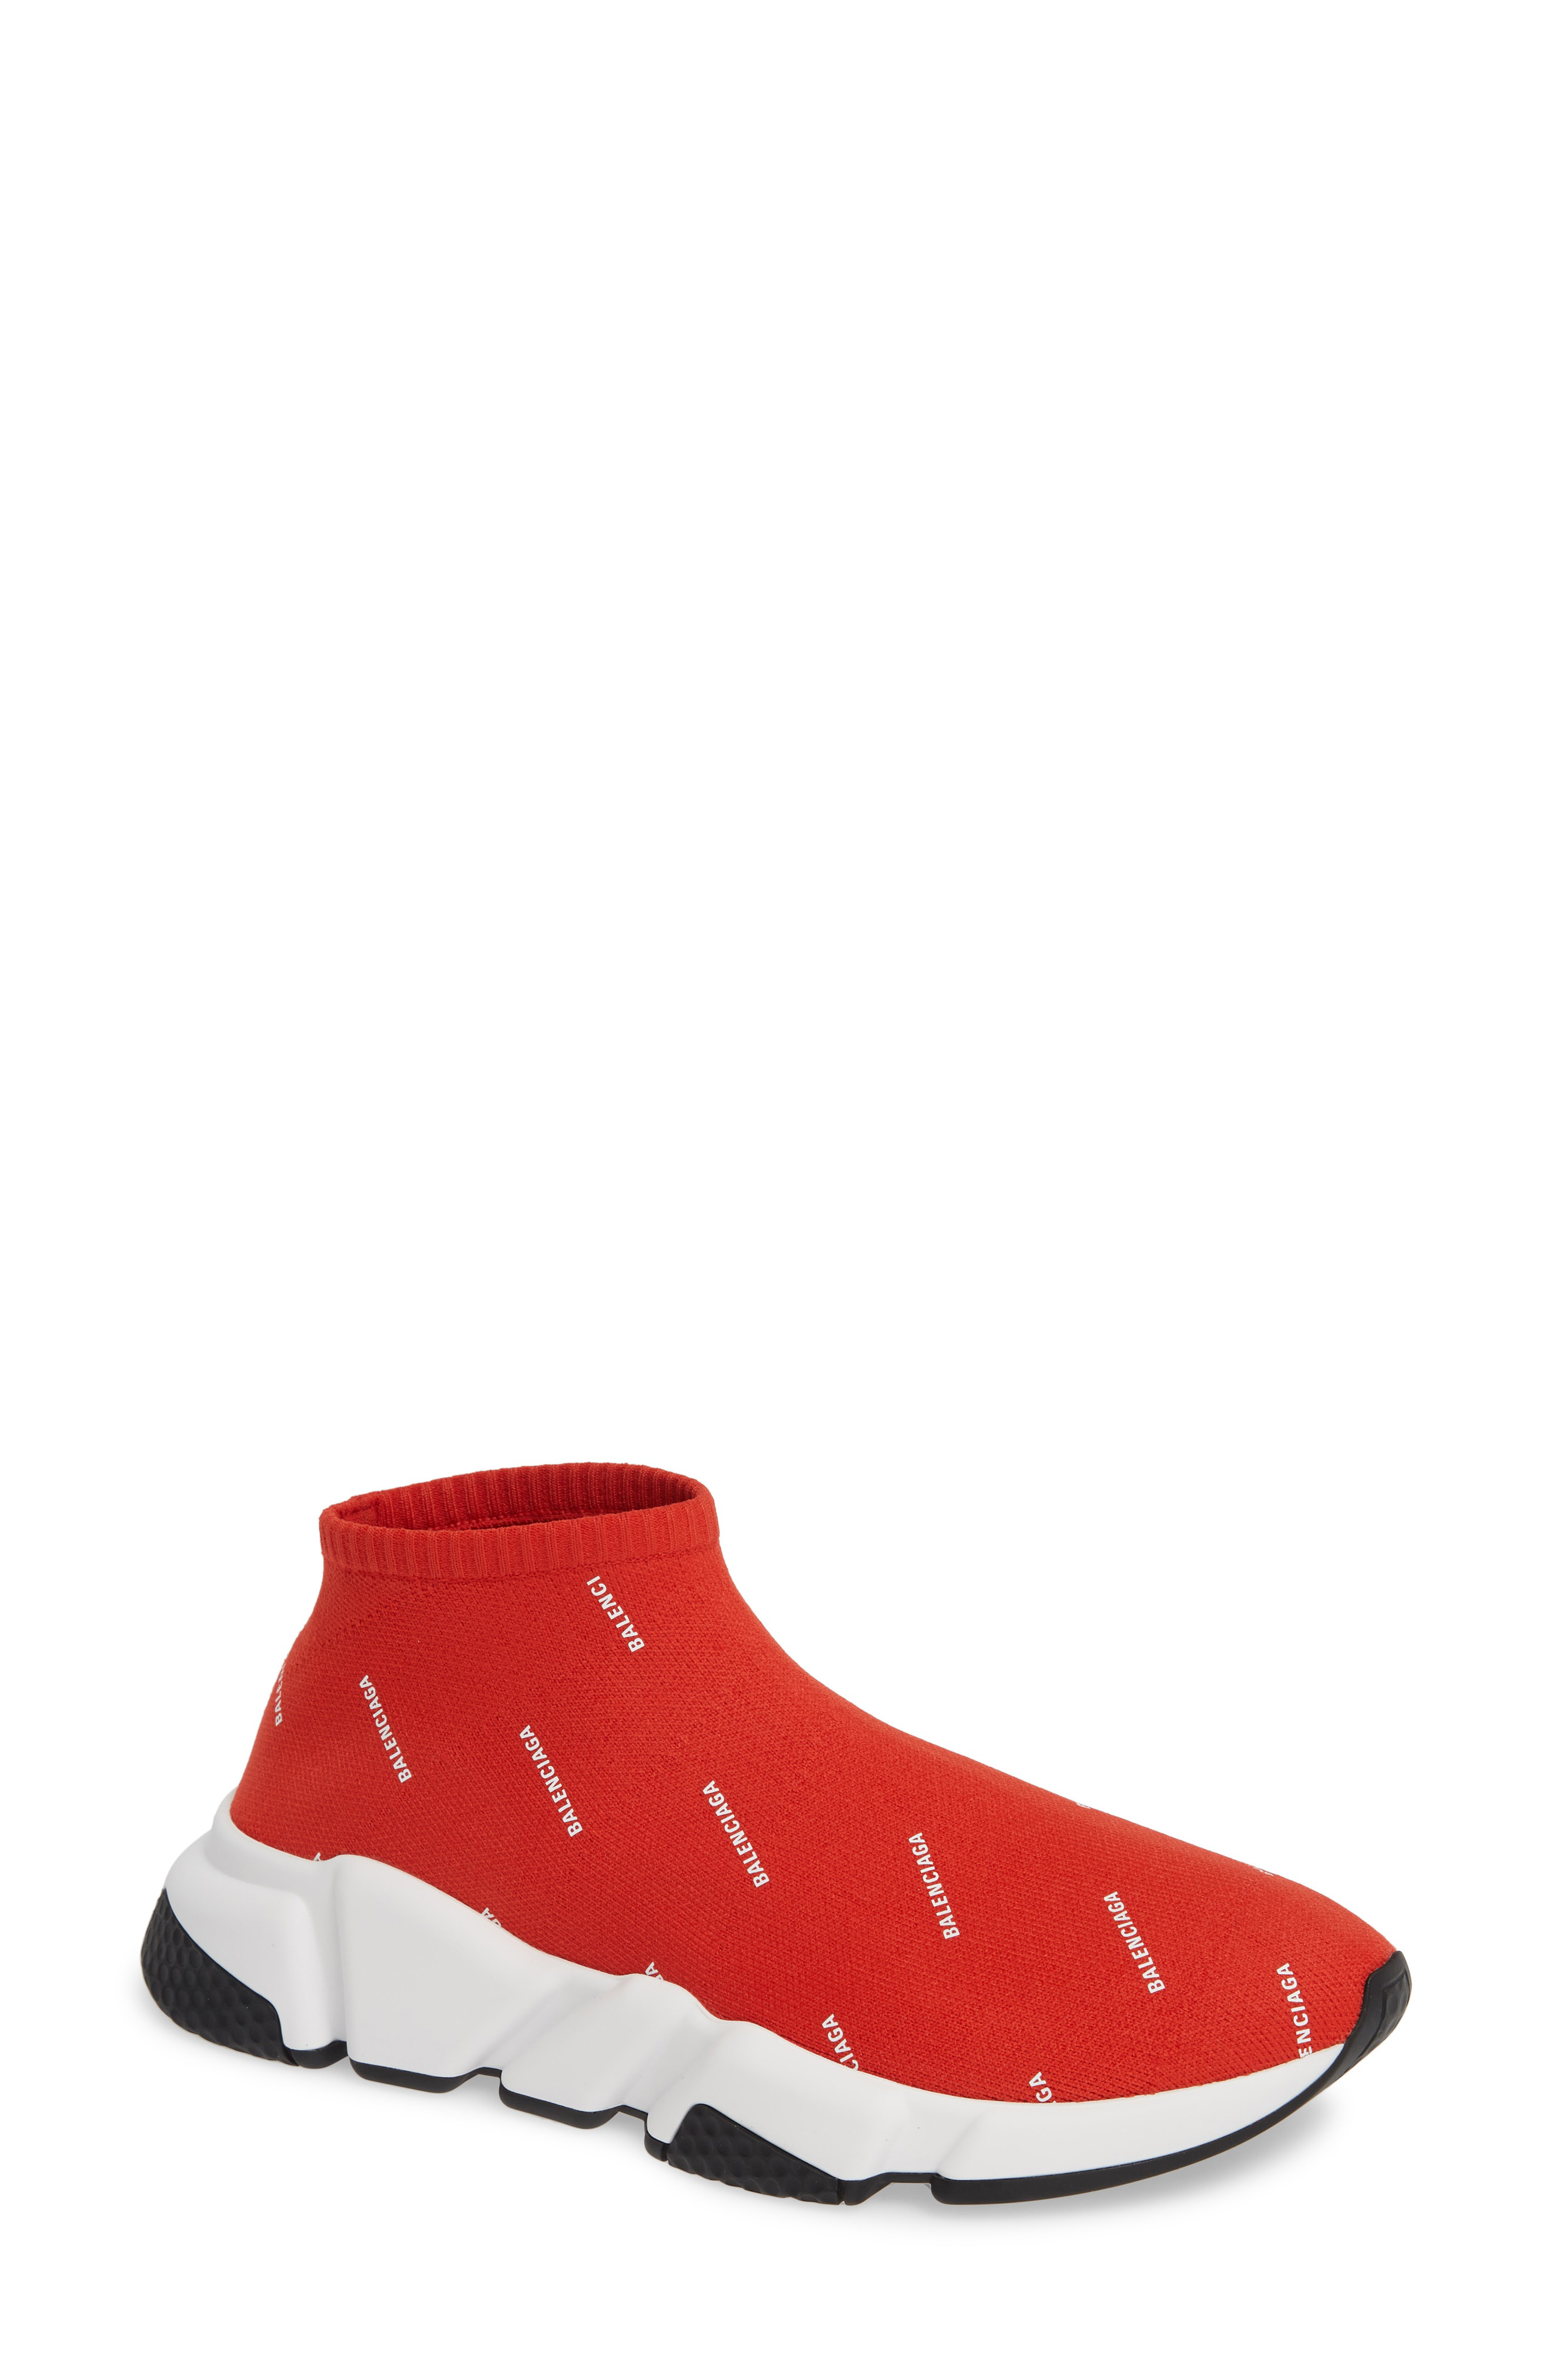 علمي تأثير منطقيا balenciaga sock shoes red - cncsteelfabrication.com